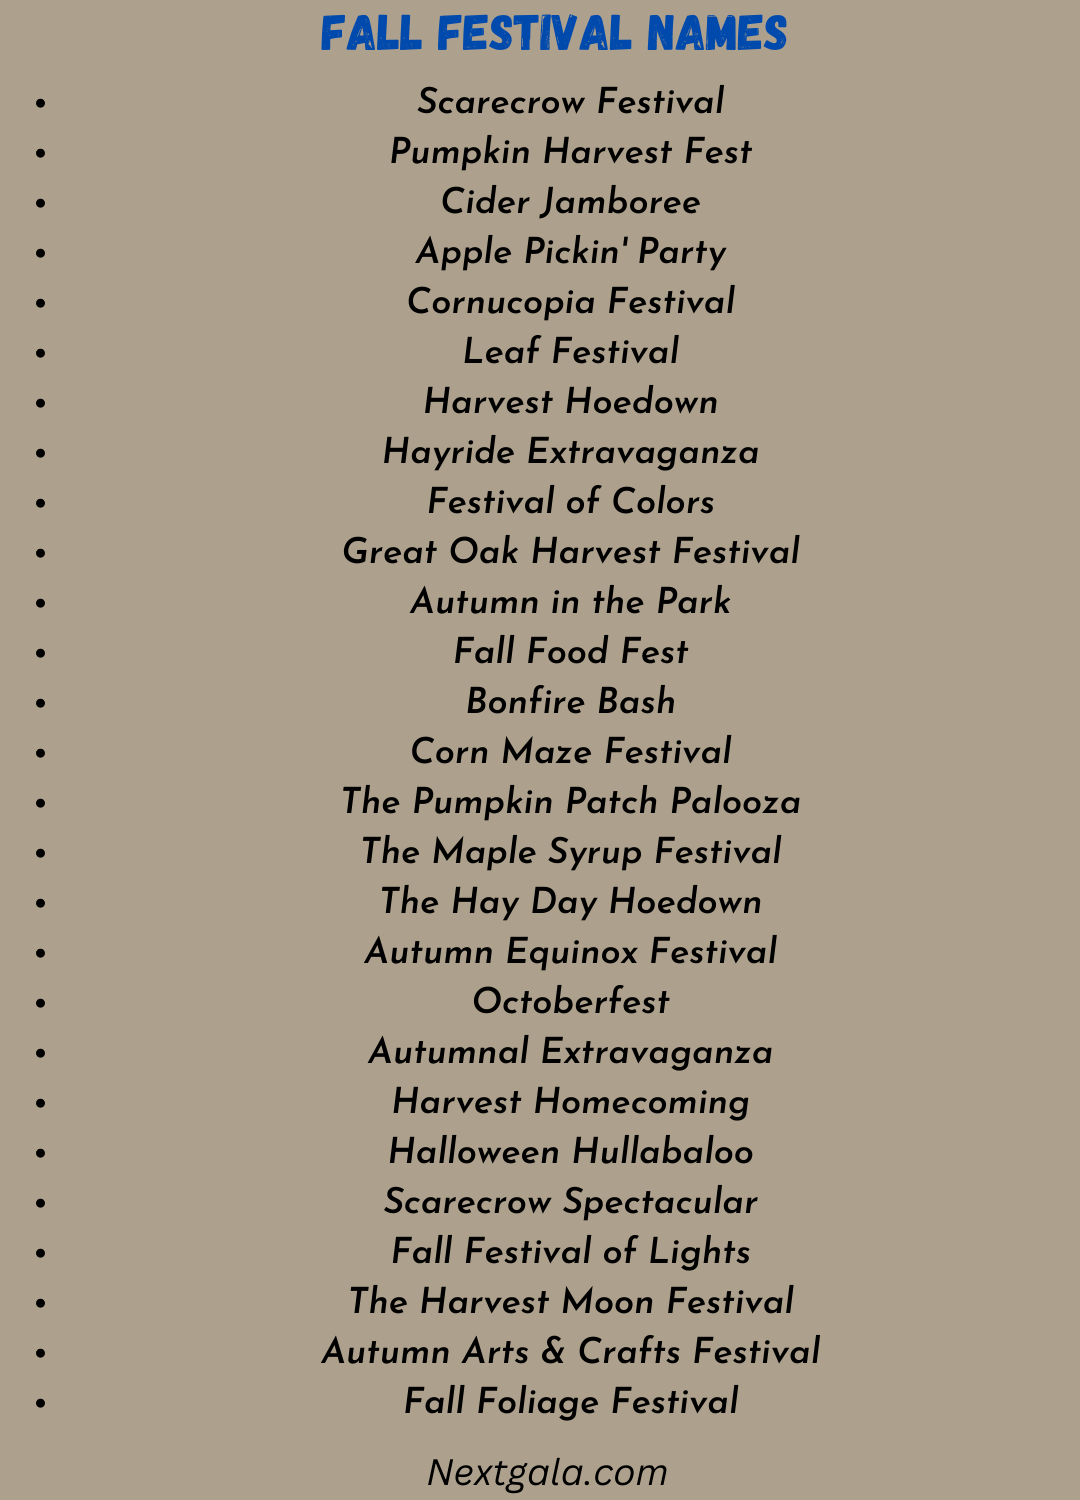 Fall Festival Names